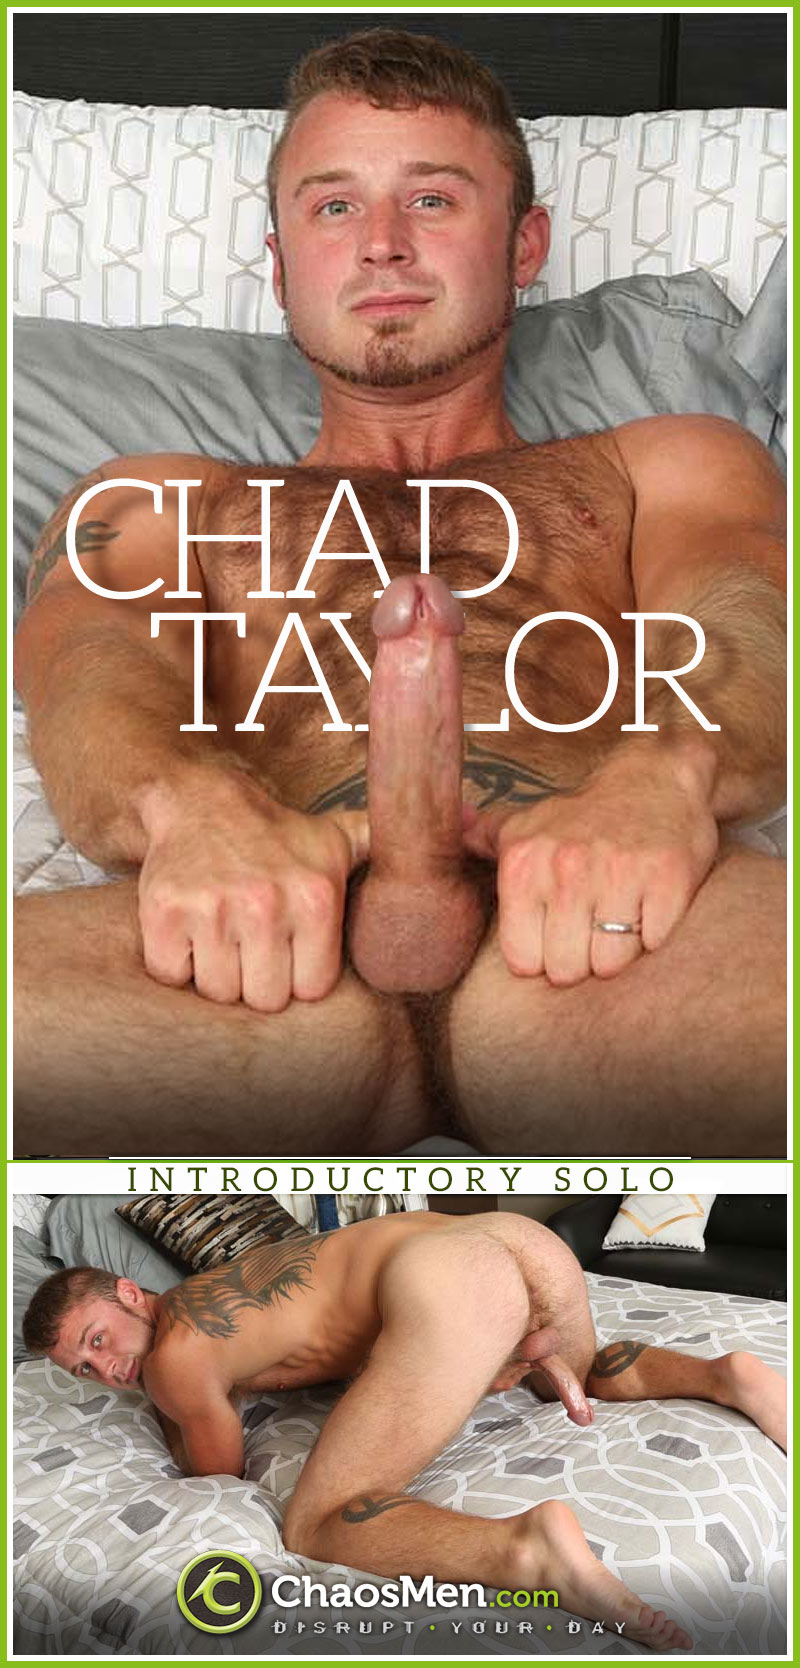 Chad Taylor Solo at ChaosMen